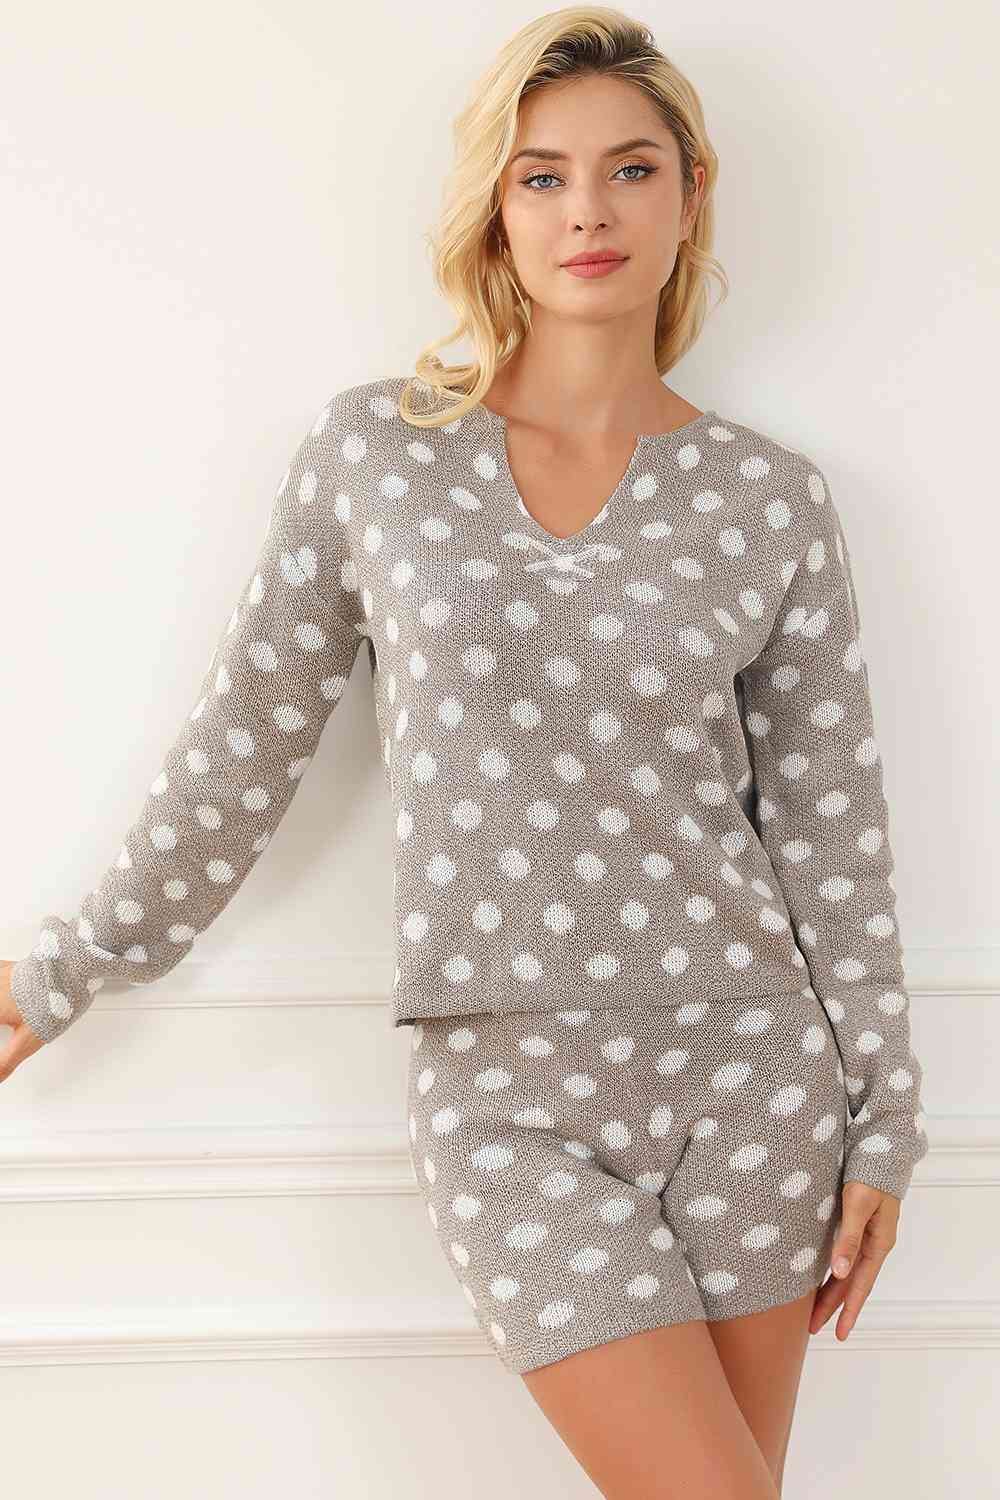 Light Gray Polka Dot Notched Neck Top and Shorts Set Sentient Beauty Fashions Sleepwear